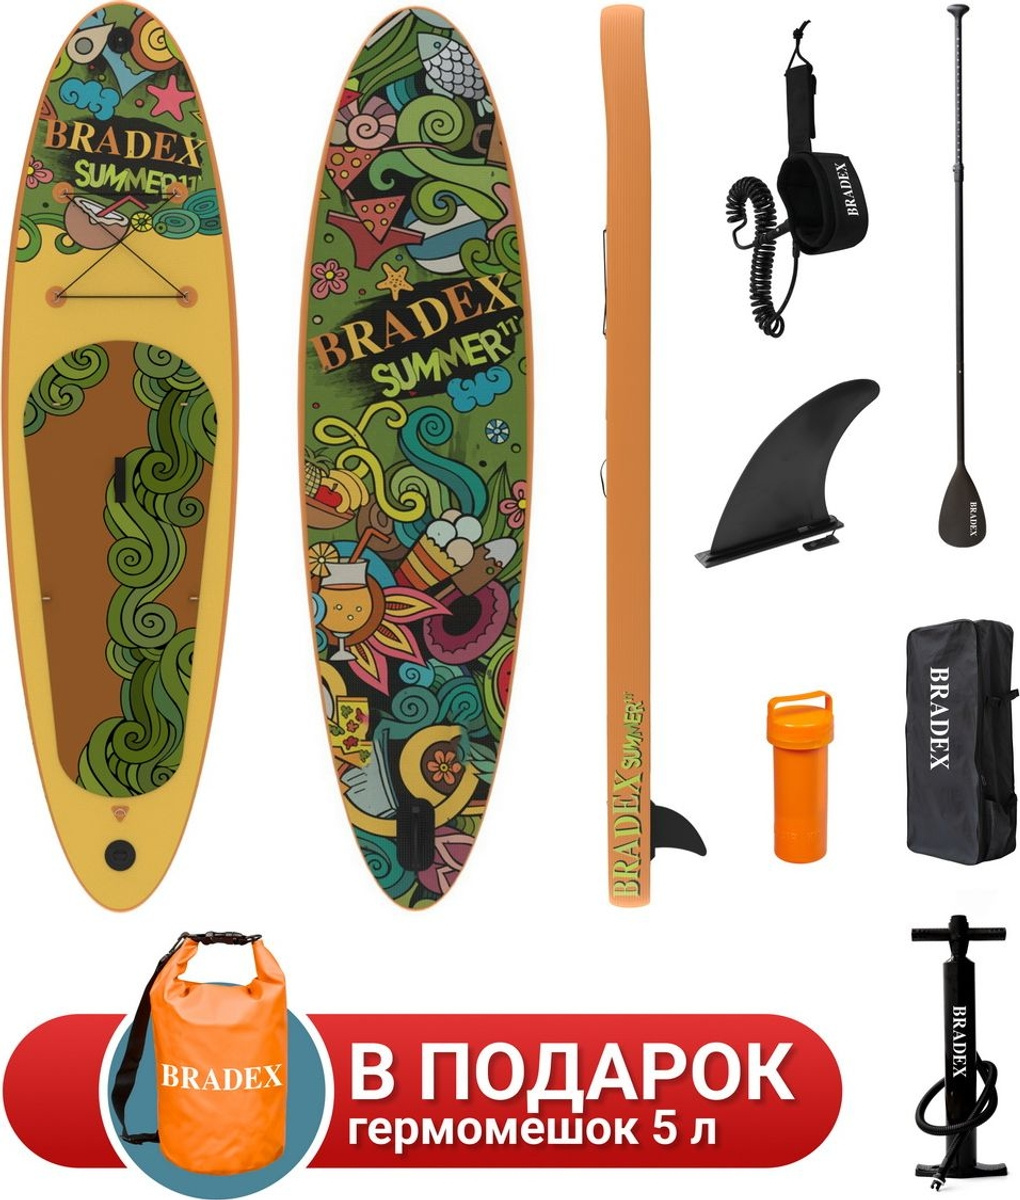 Bradex Bradex Summer 11’ из каталога SUP досок в Санкт-Петербурге по цене 33590 ₽